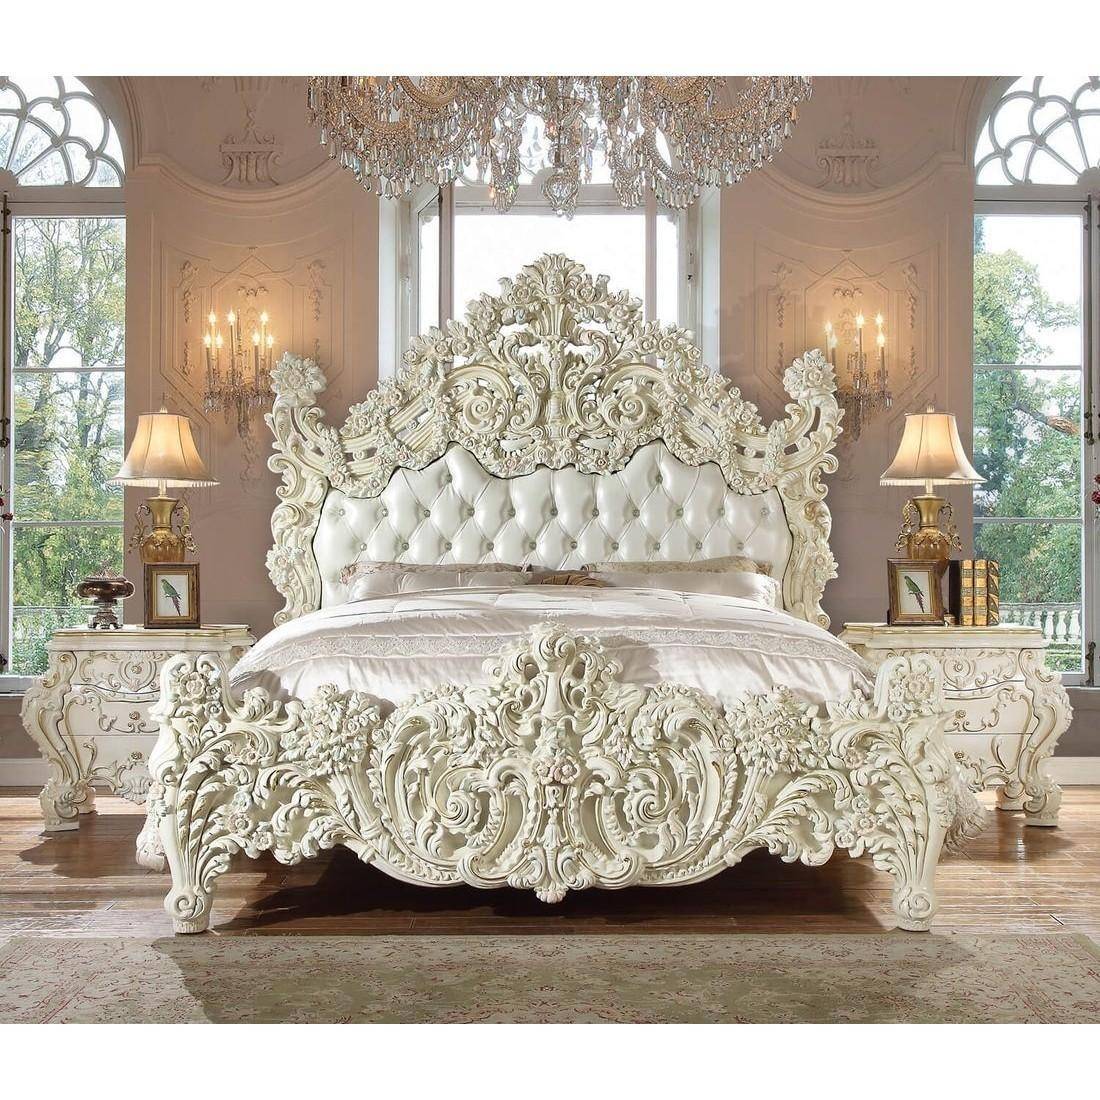 Buy Homey Design HD-8089 King Sleigh Bedroom Set 3 Pcs in White, Gold